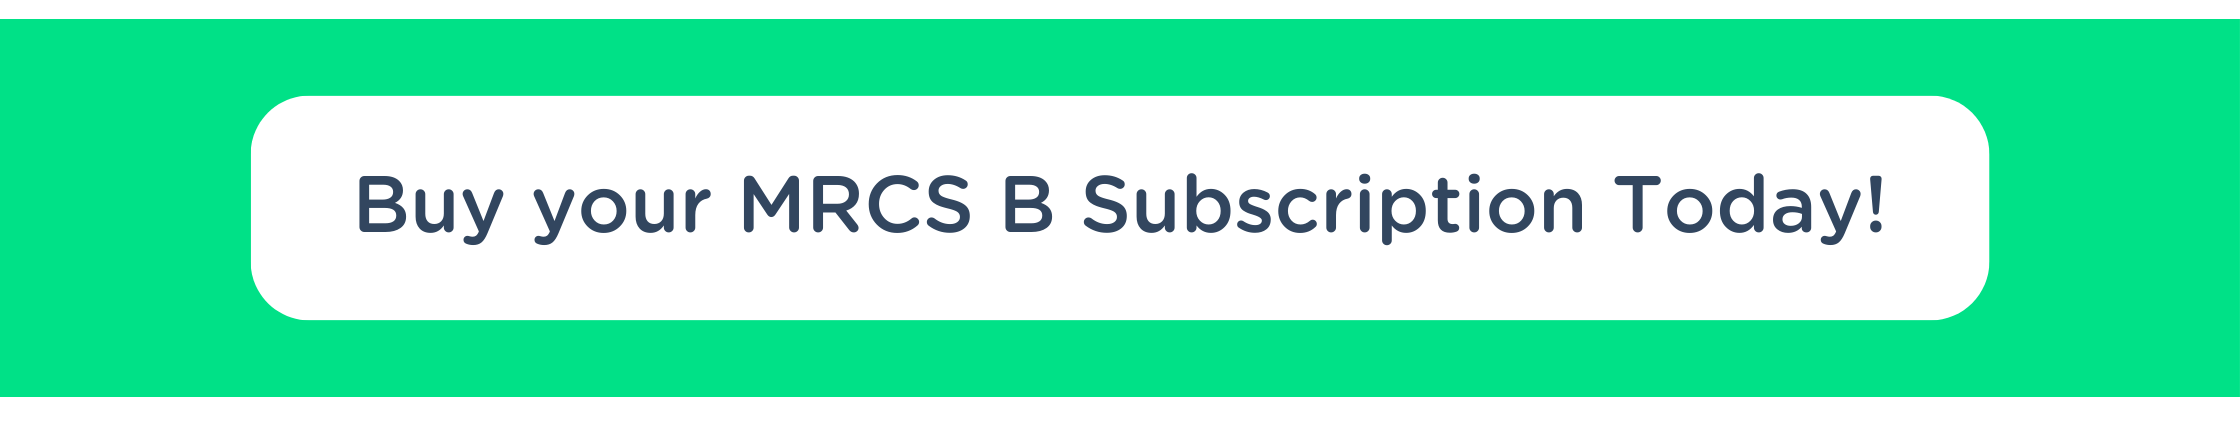 MRCS B Subscription Banner